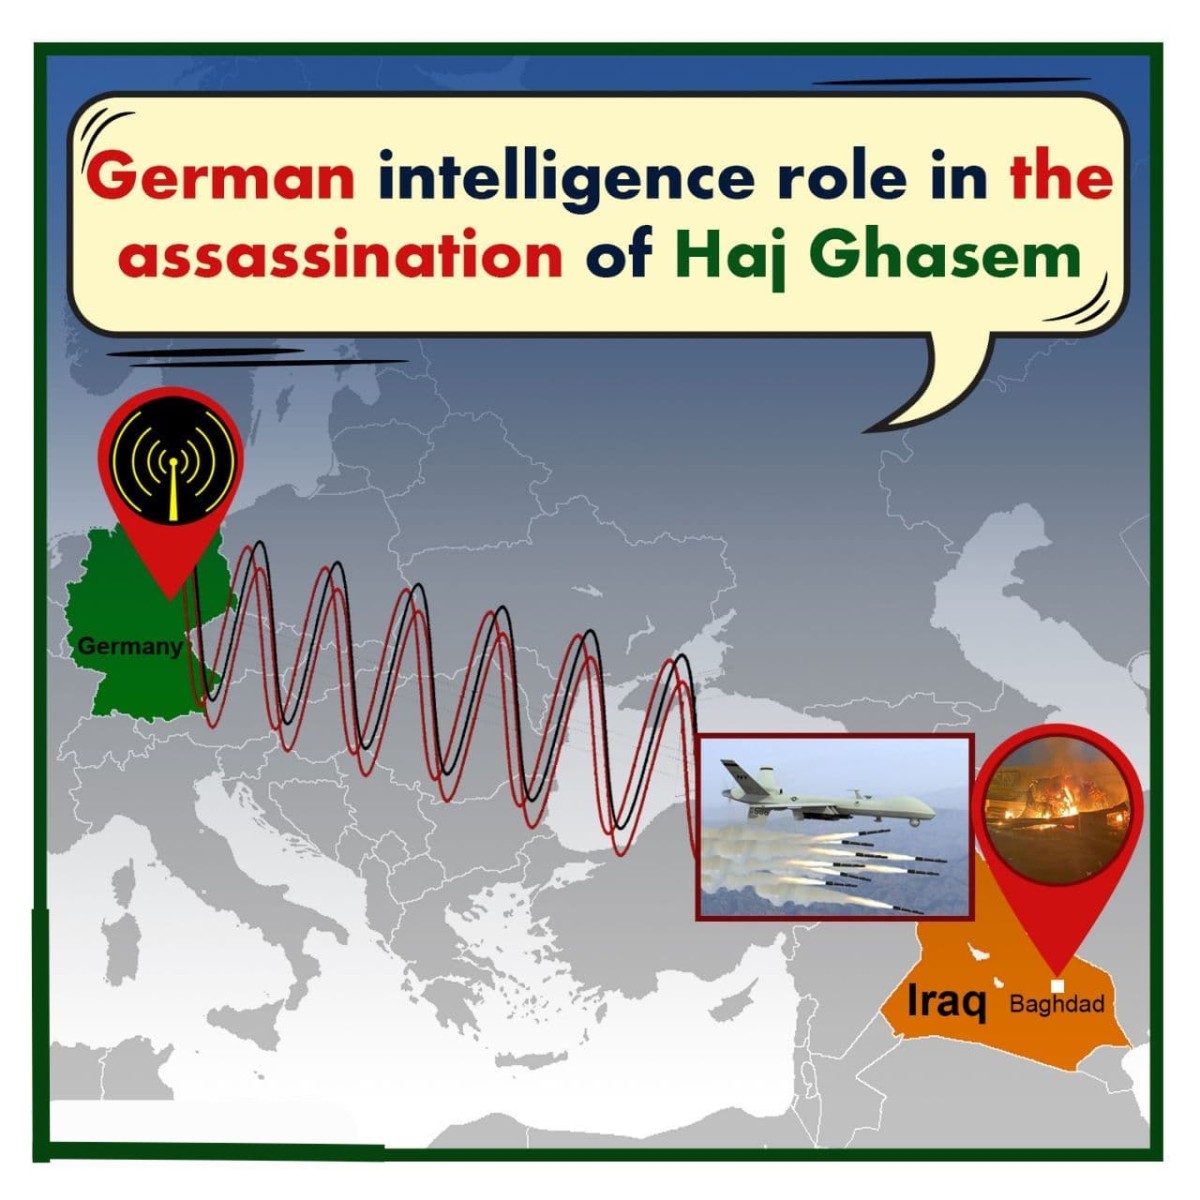  German intelligence role in the assassination of Haj Ghasem